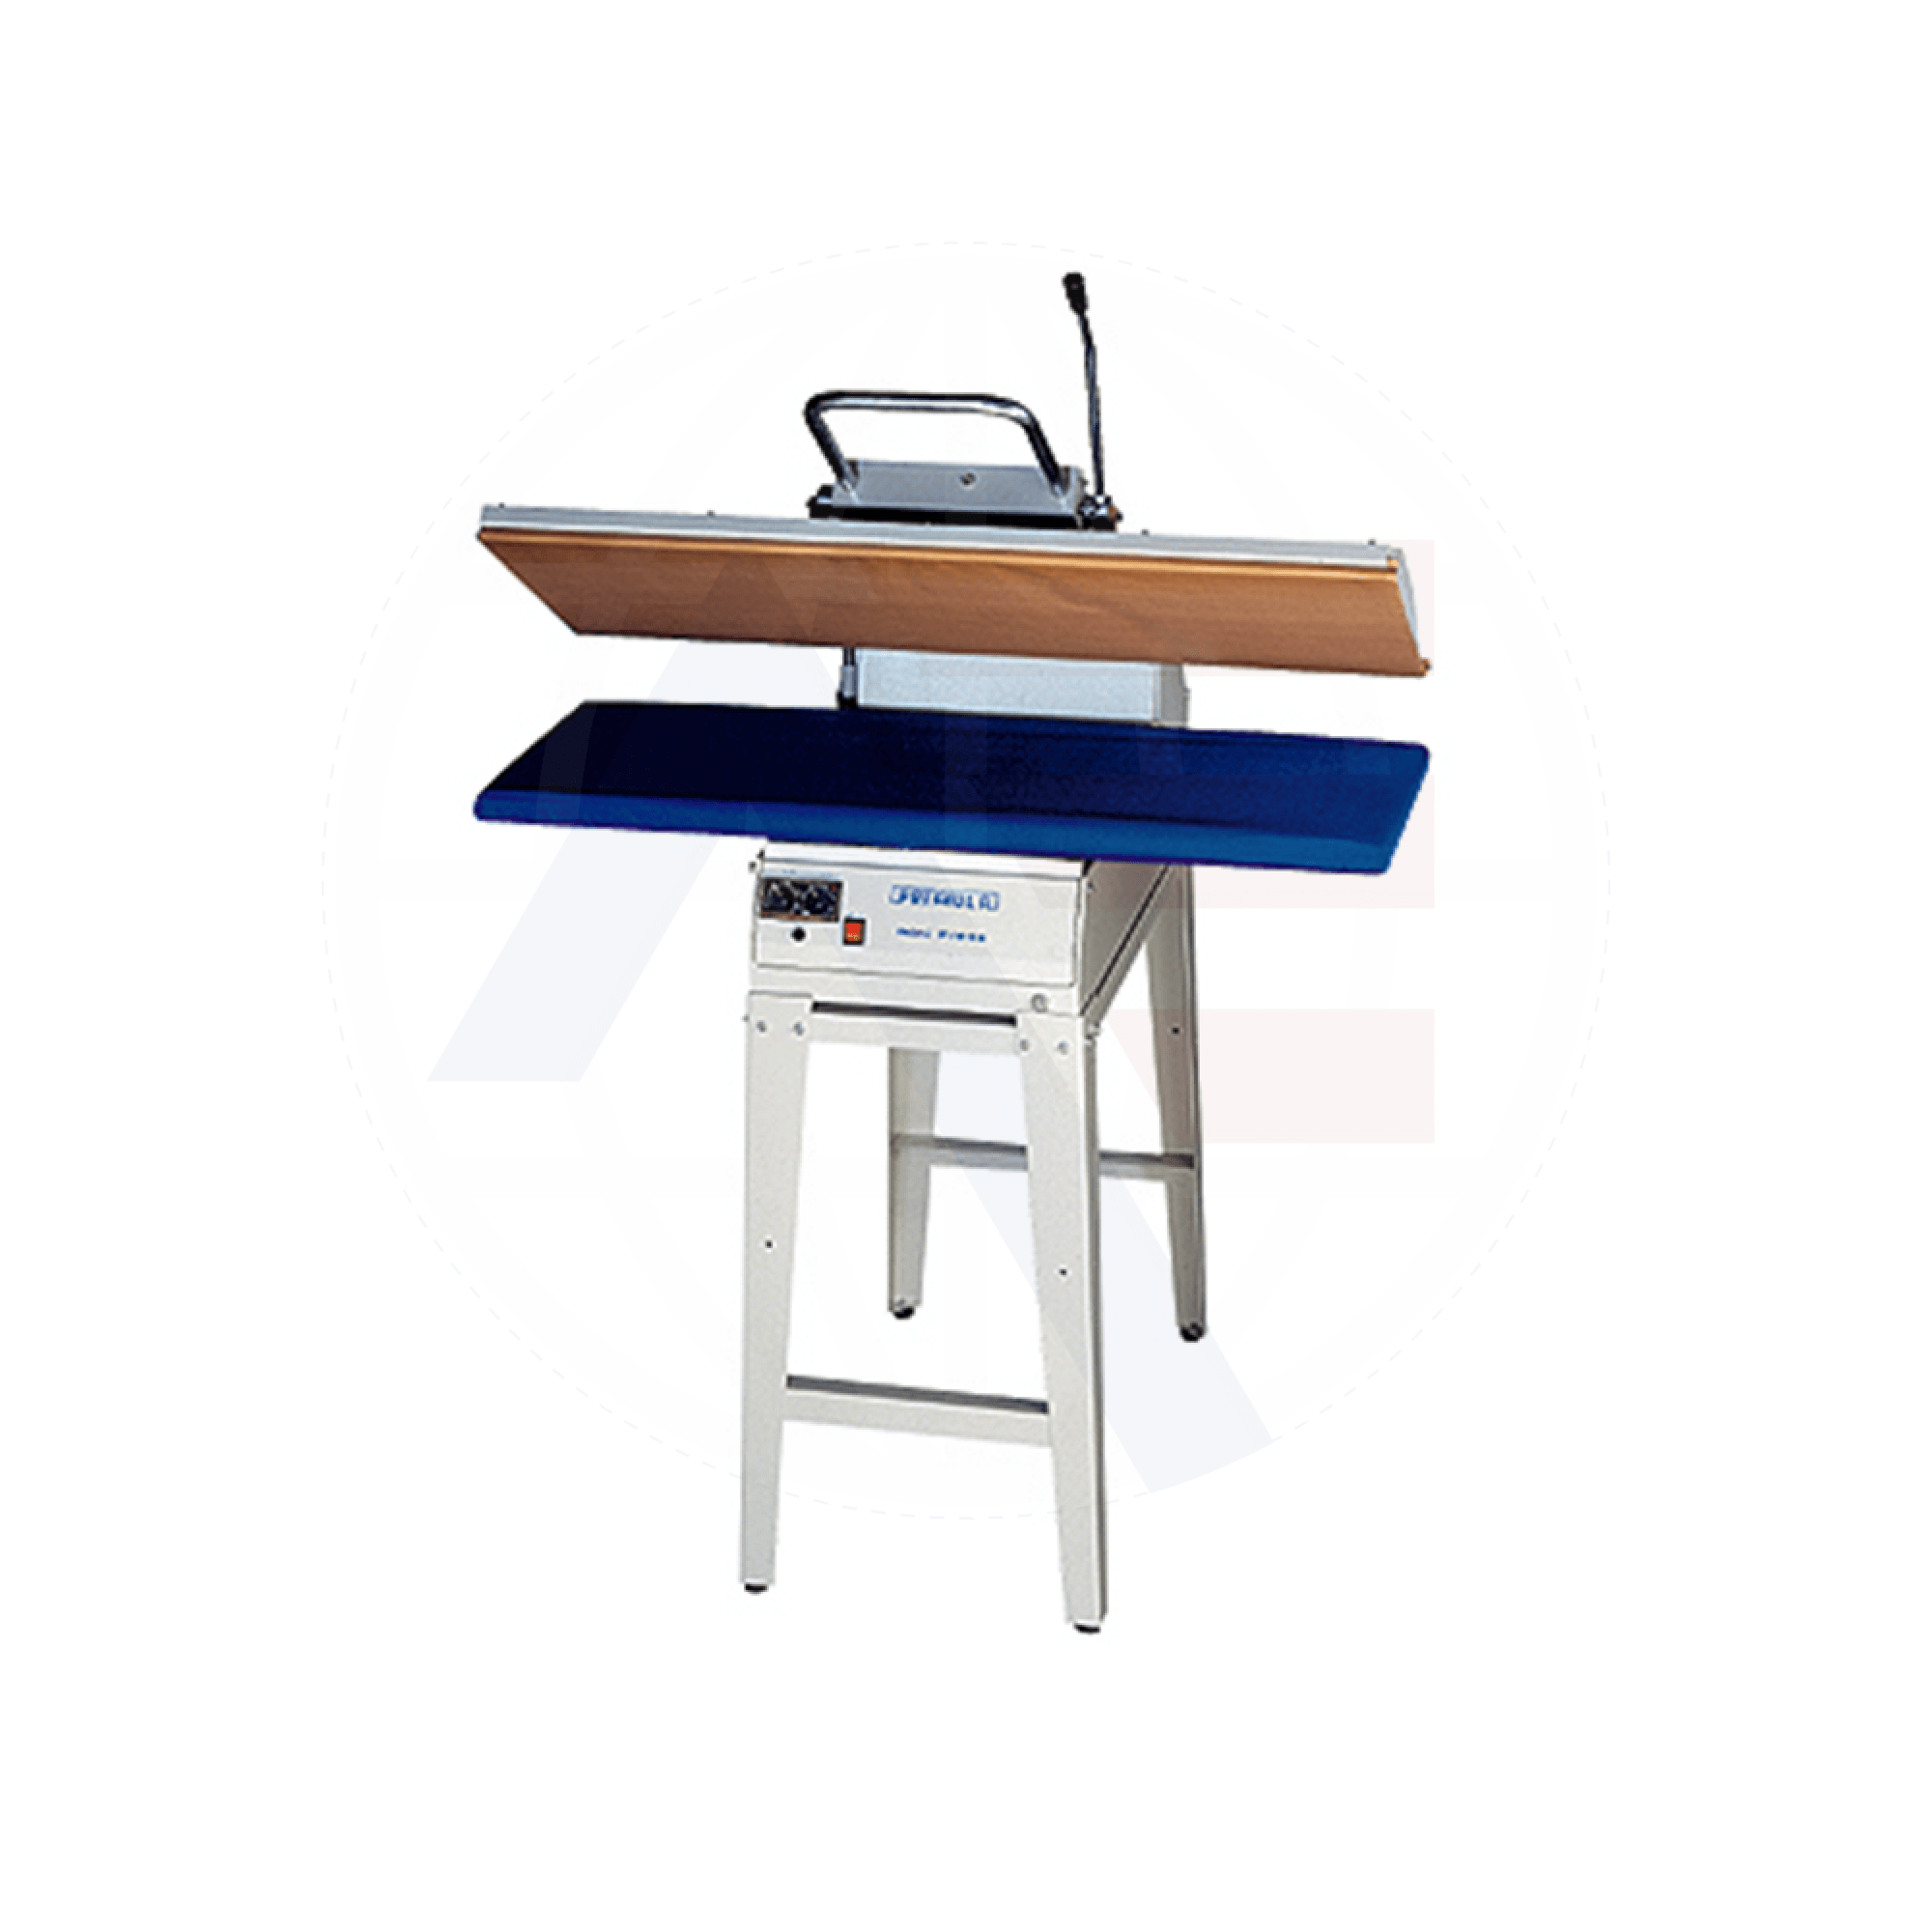 Primula Ma 1250 Manual Fusing Press Pressing Equipment